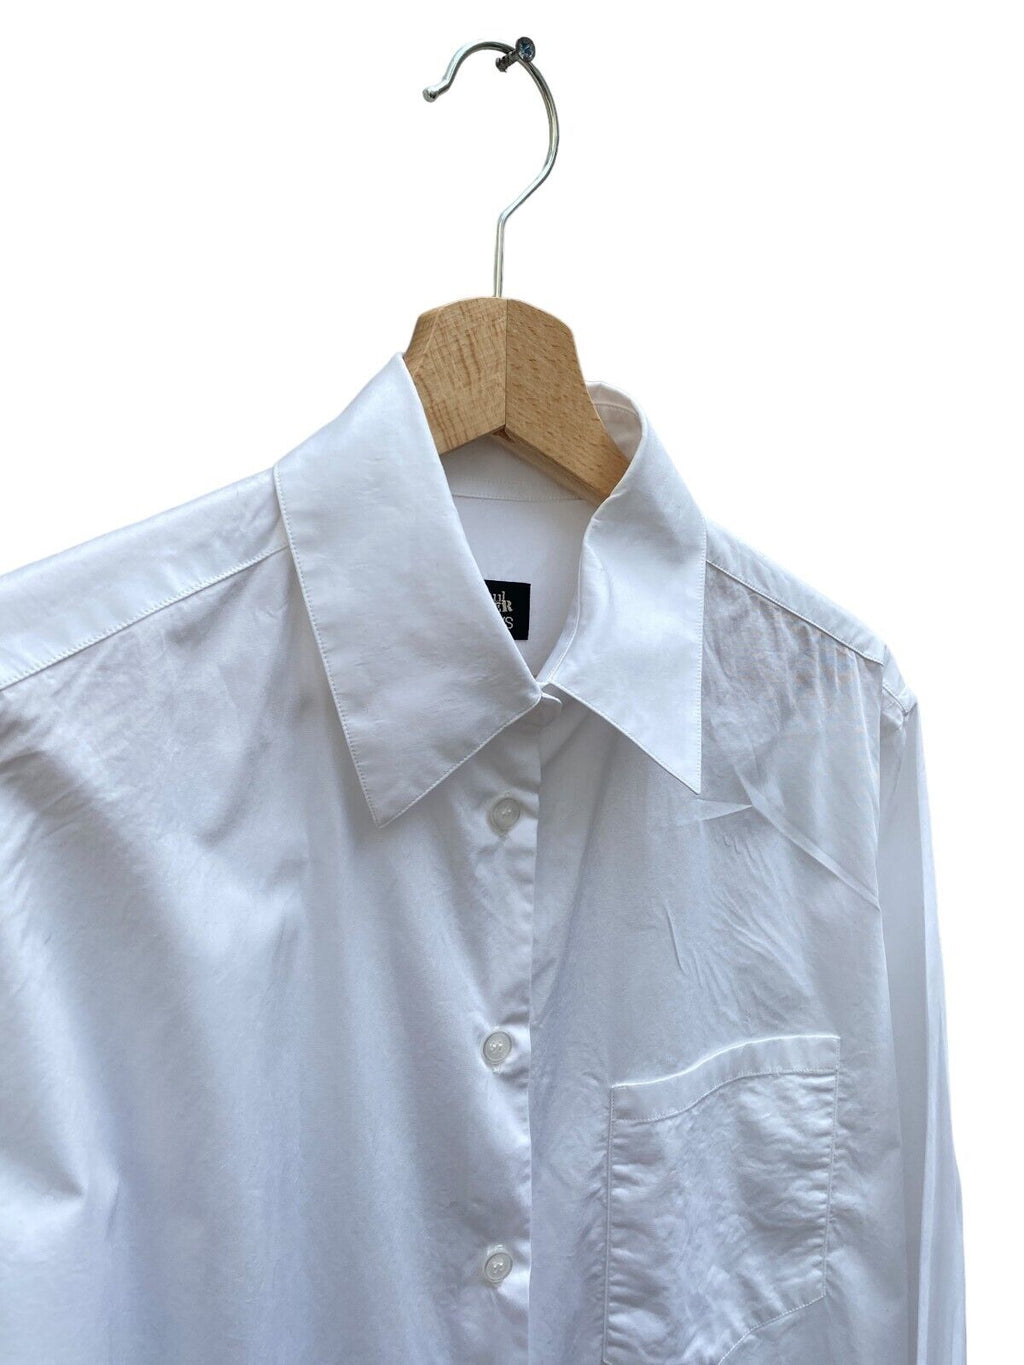 Oversized Elongated White shirt / dress